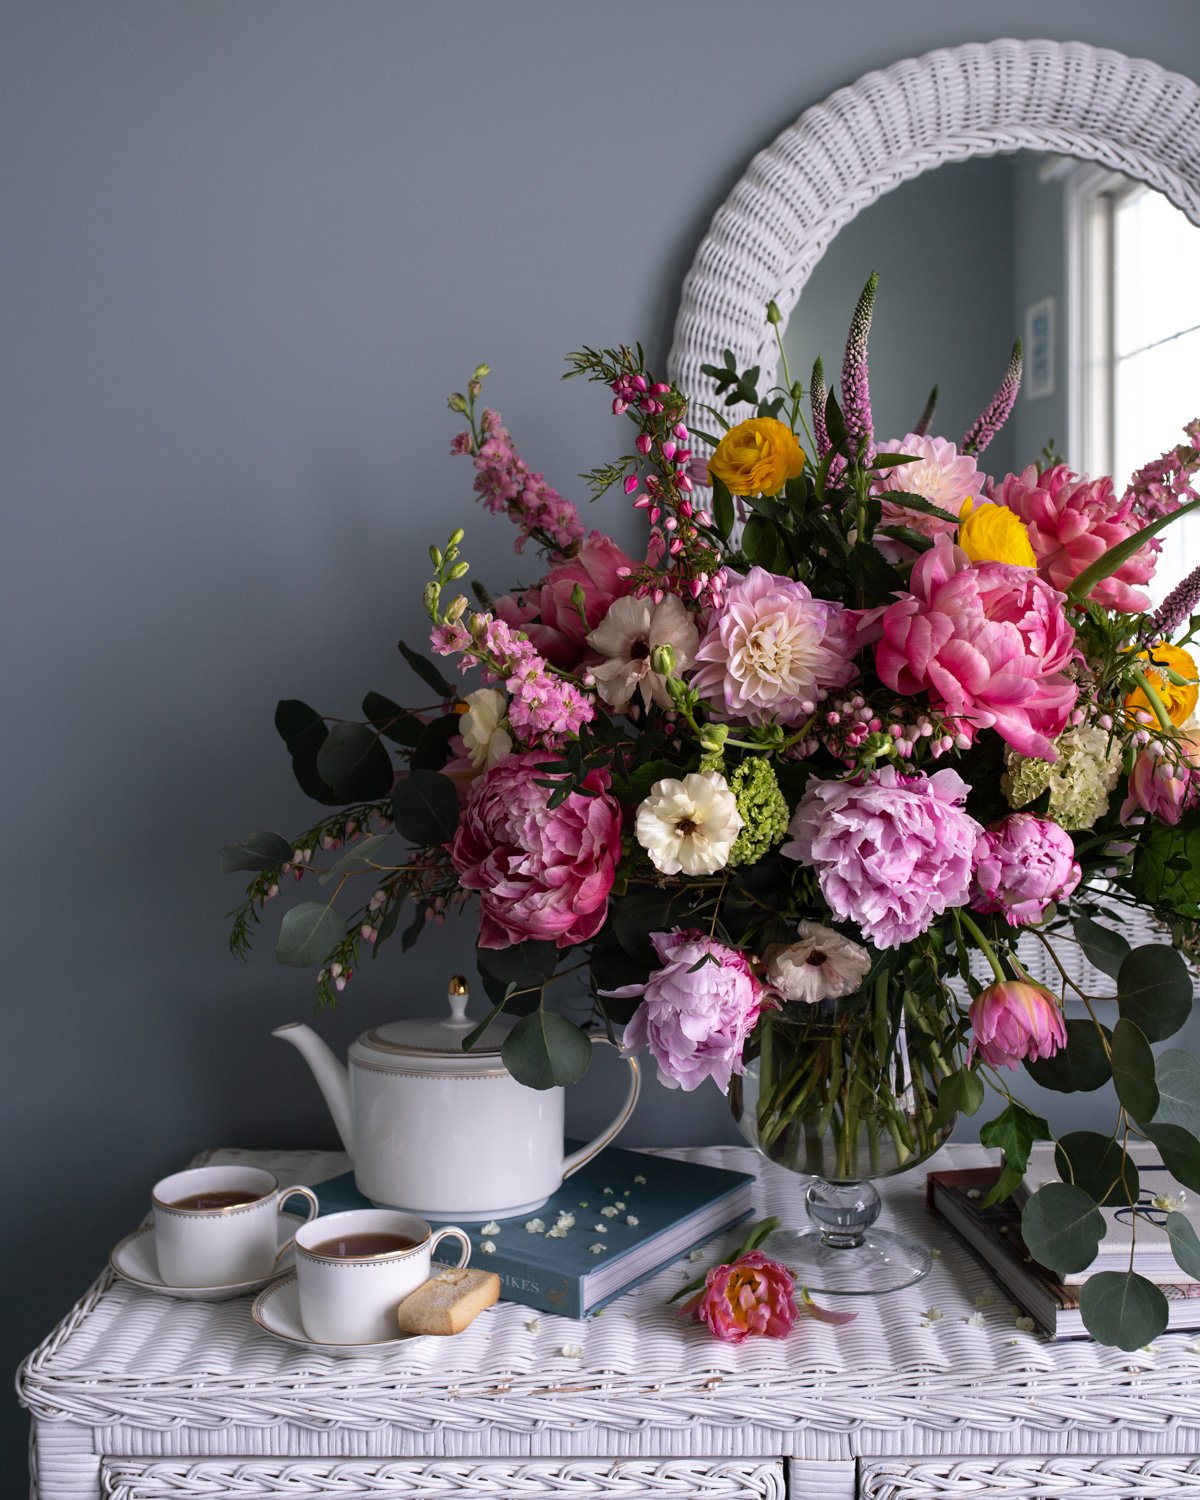 Stacie Flinner x Flowers And Tea-1.jpg